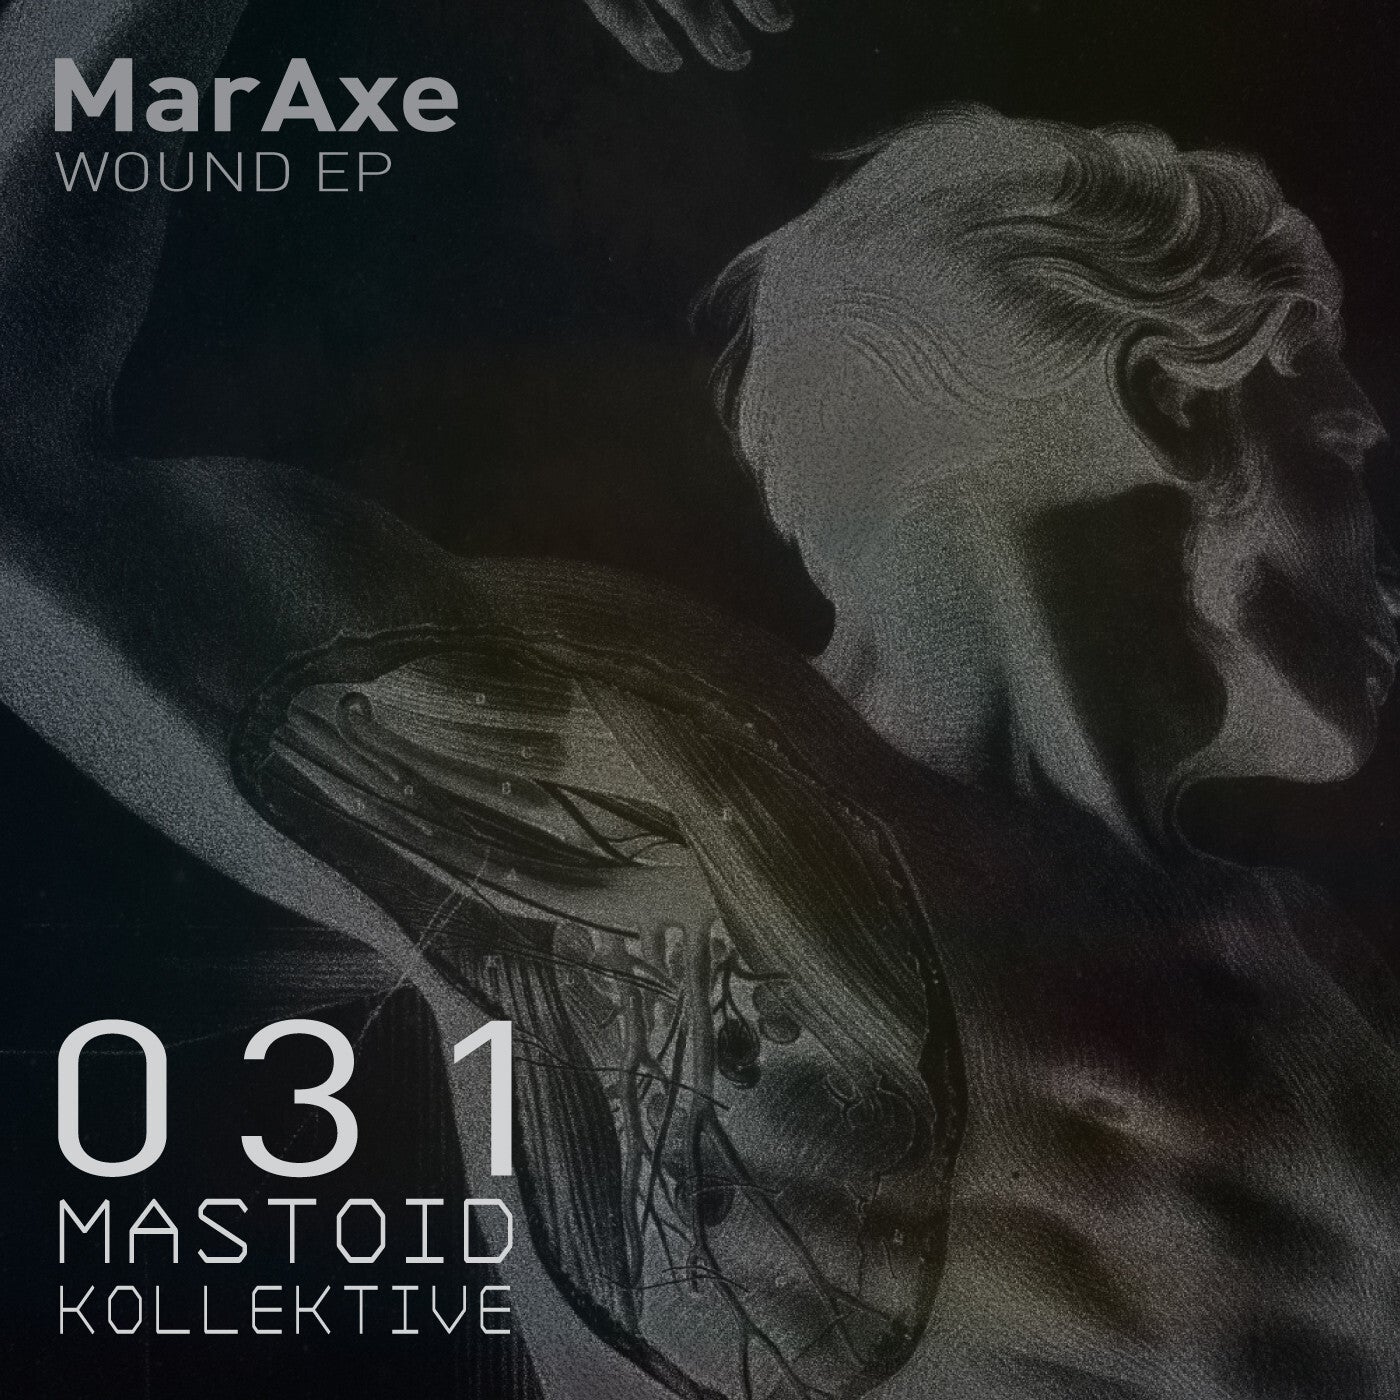 MarAxe – Wound EP [MK031]